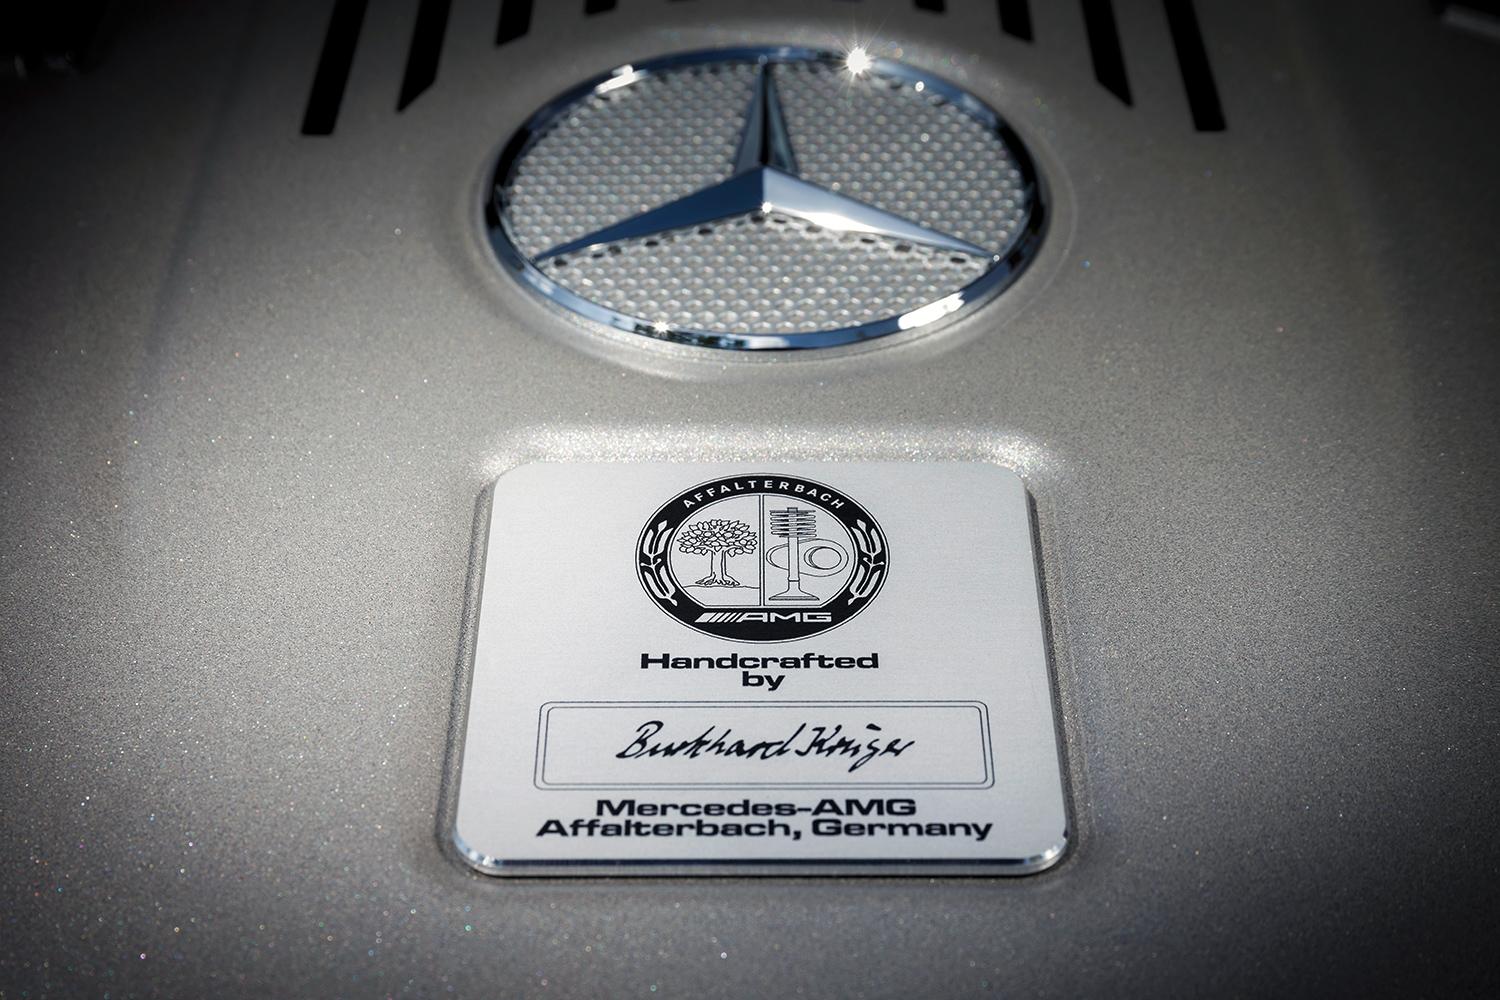 2015 Mercedes_Benz S65 AMG engine badge